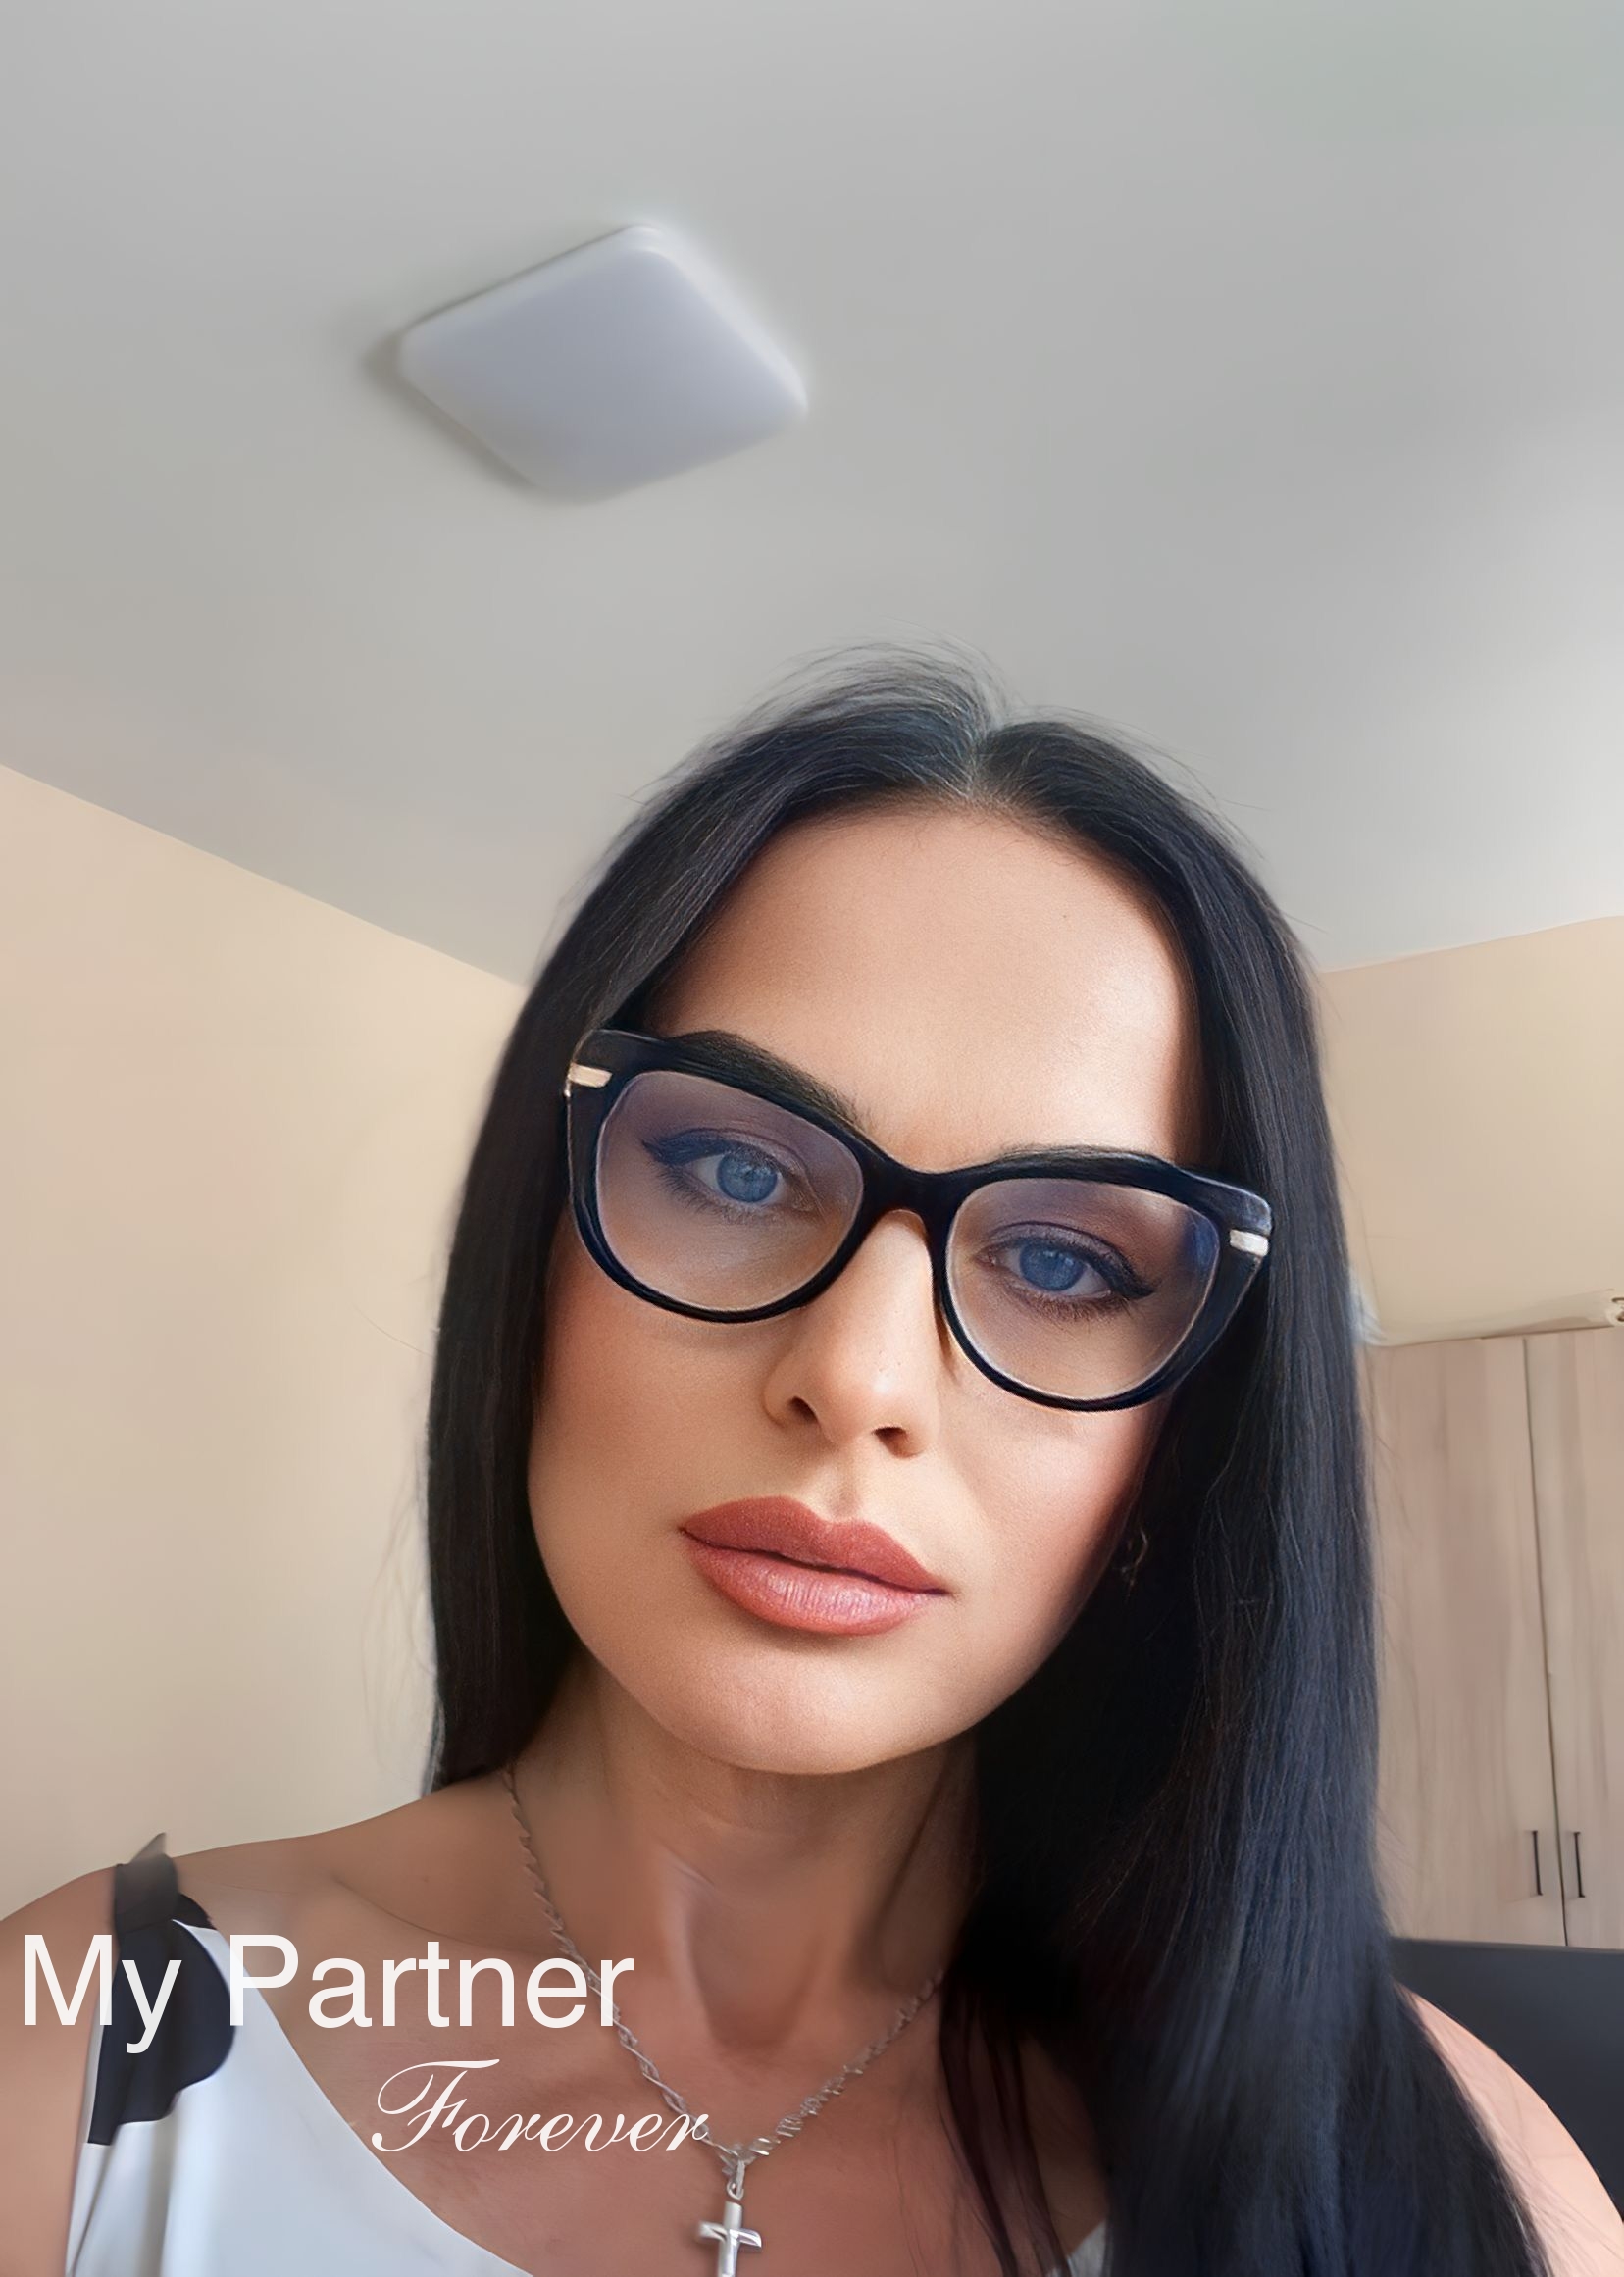 Dating Service to Meet Pretty Ukrainian Girl Lesya from Cherkasy, Ukraine